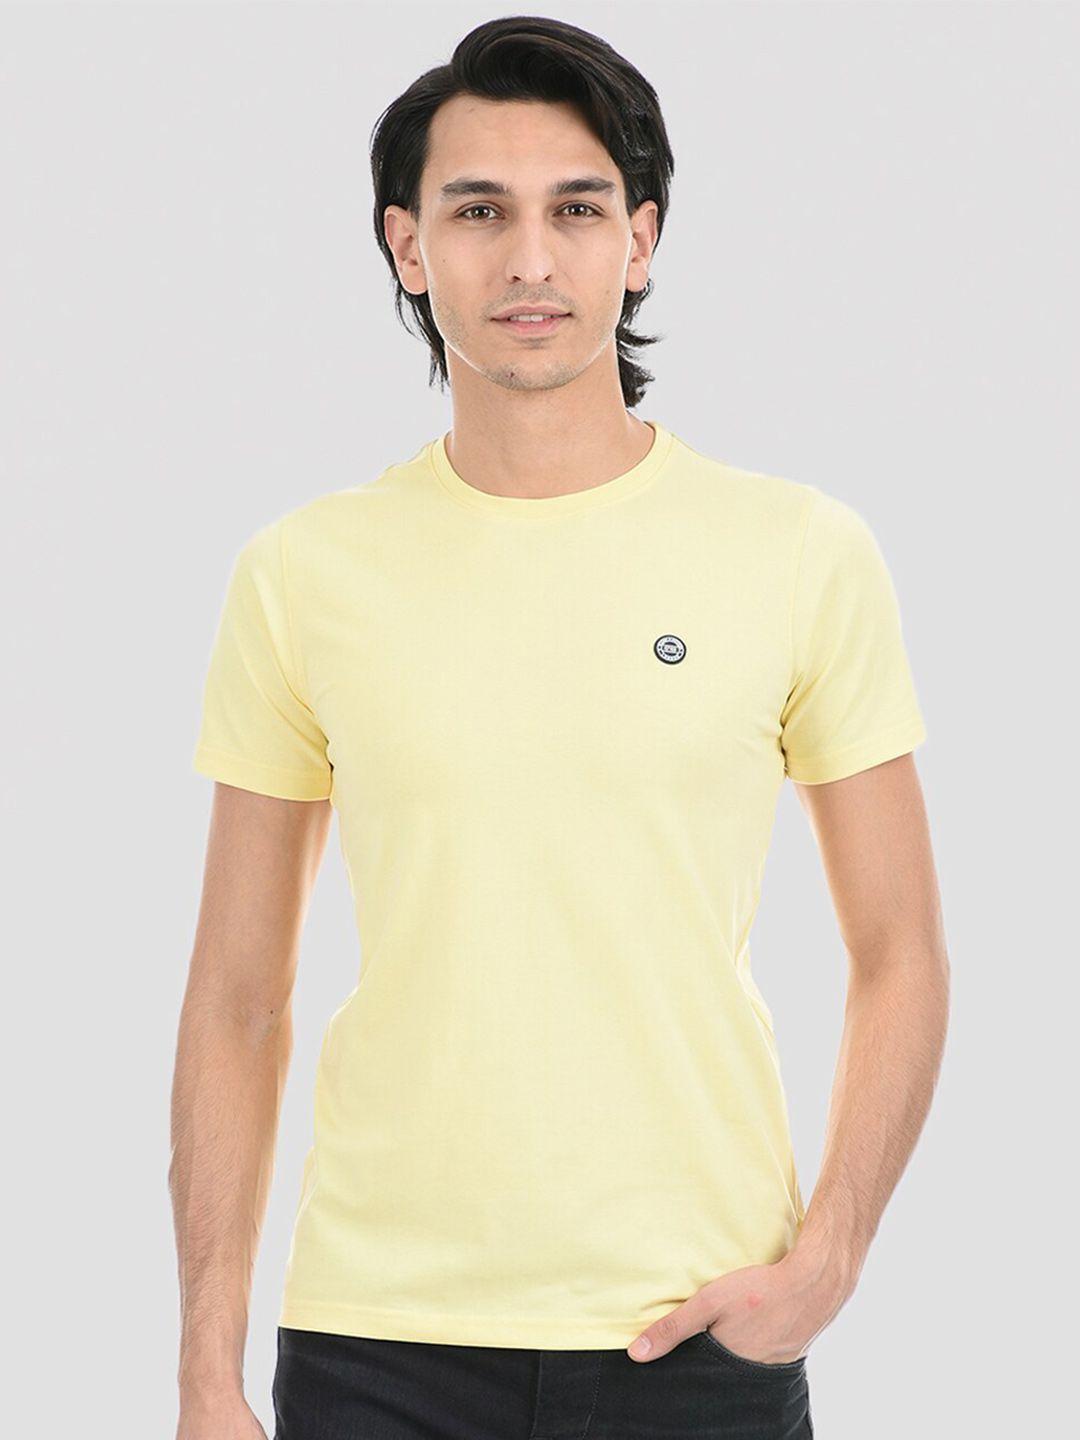 cloak & decker by monte carlo men yellow solid t-shirt